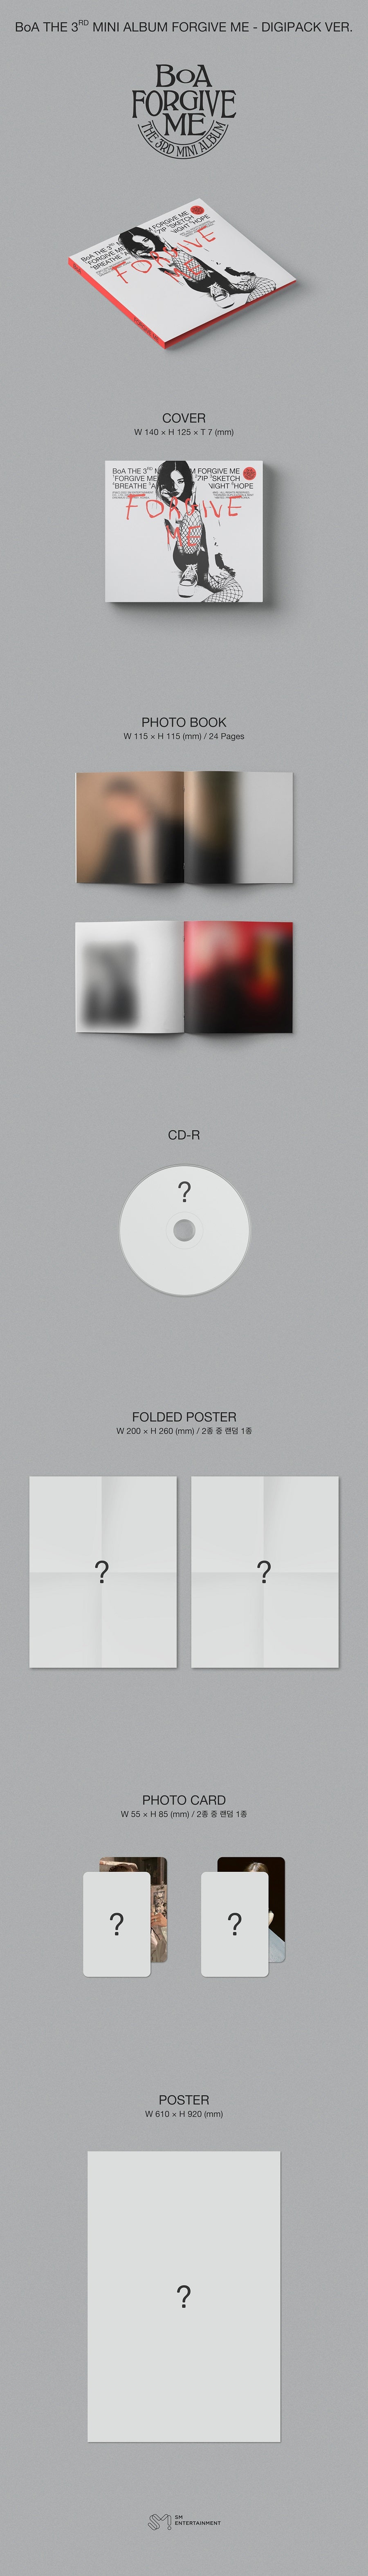 BoA Mini Album Vol. 3 - Forgive Me (Digipack Version)